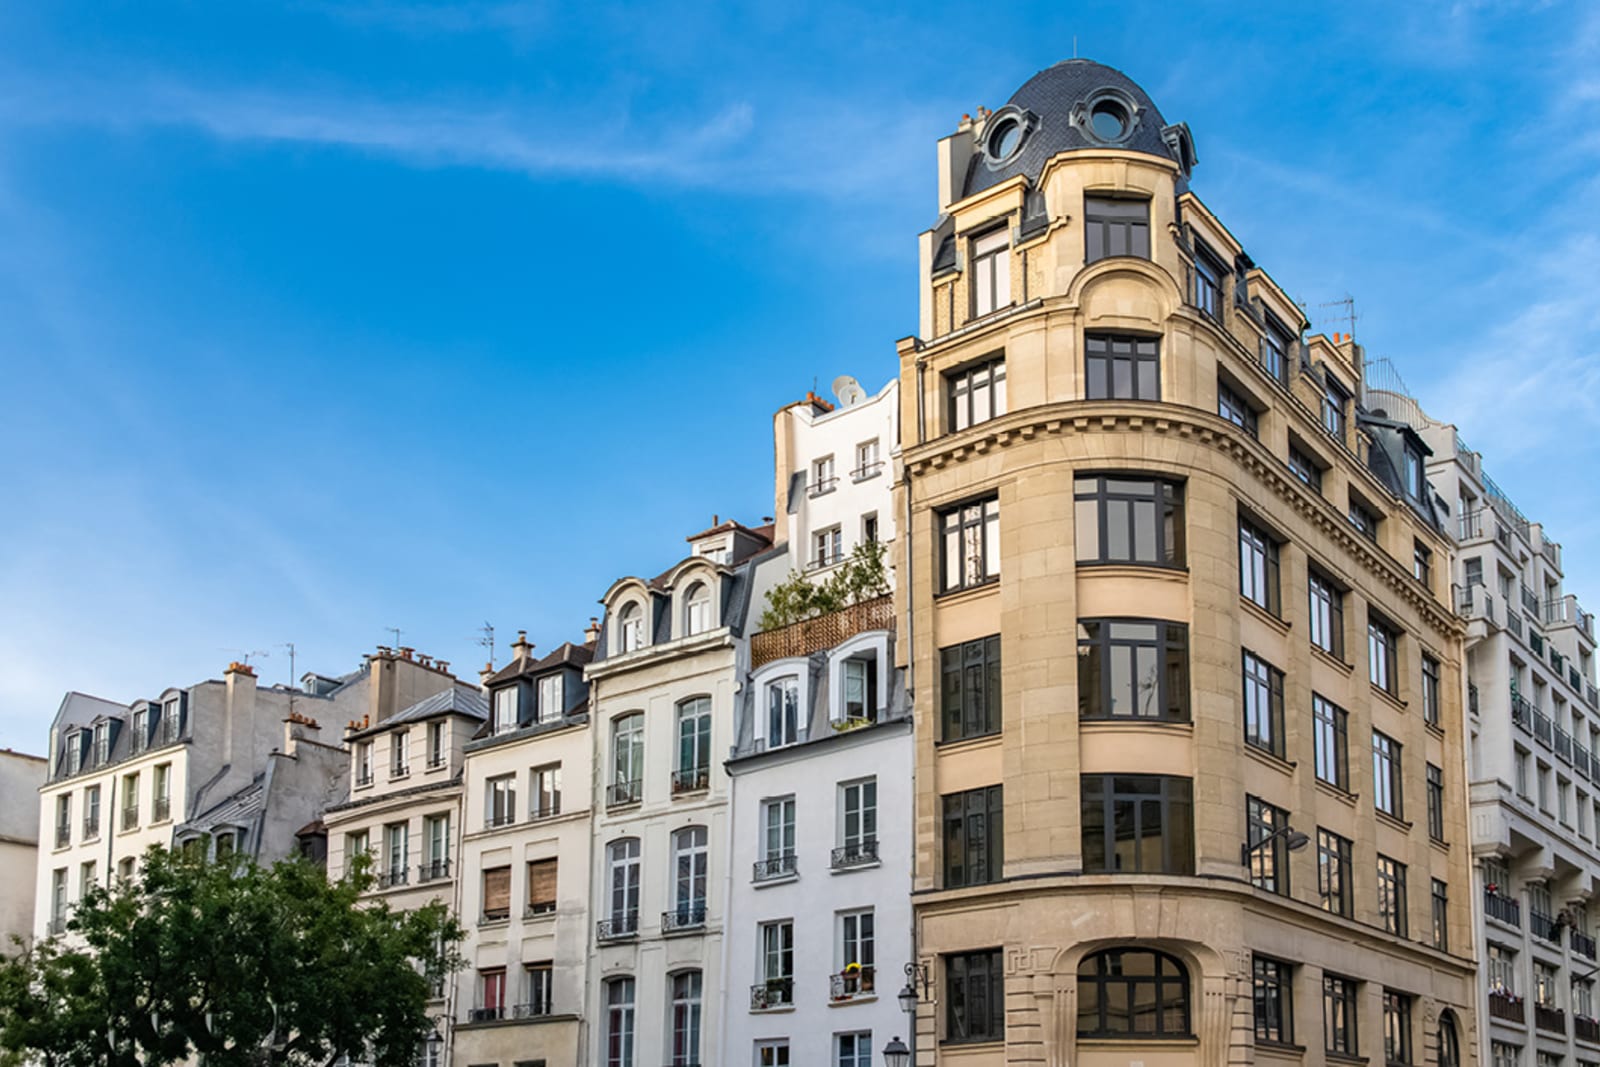 Historic buildings in the Le Marais neighbourhood in Paris, France